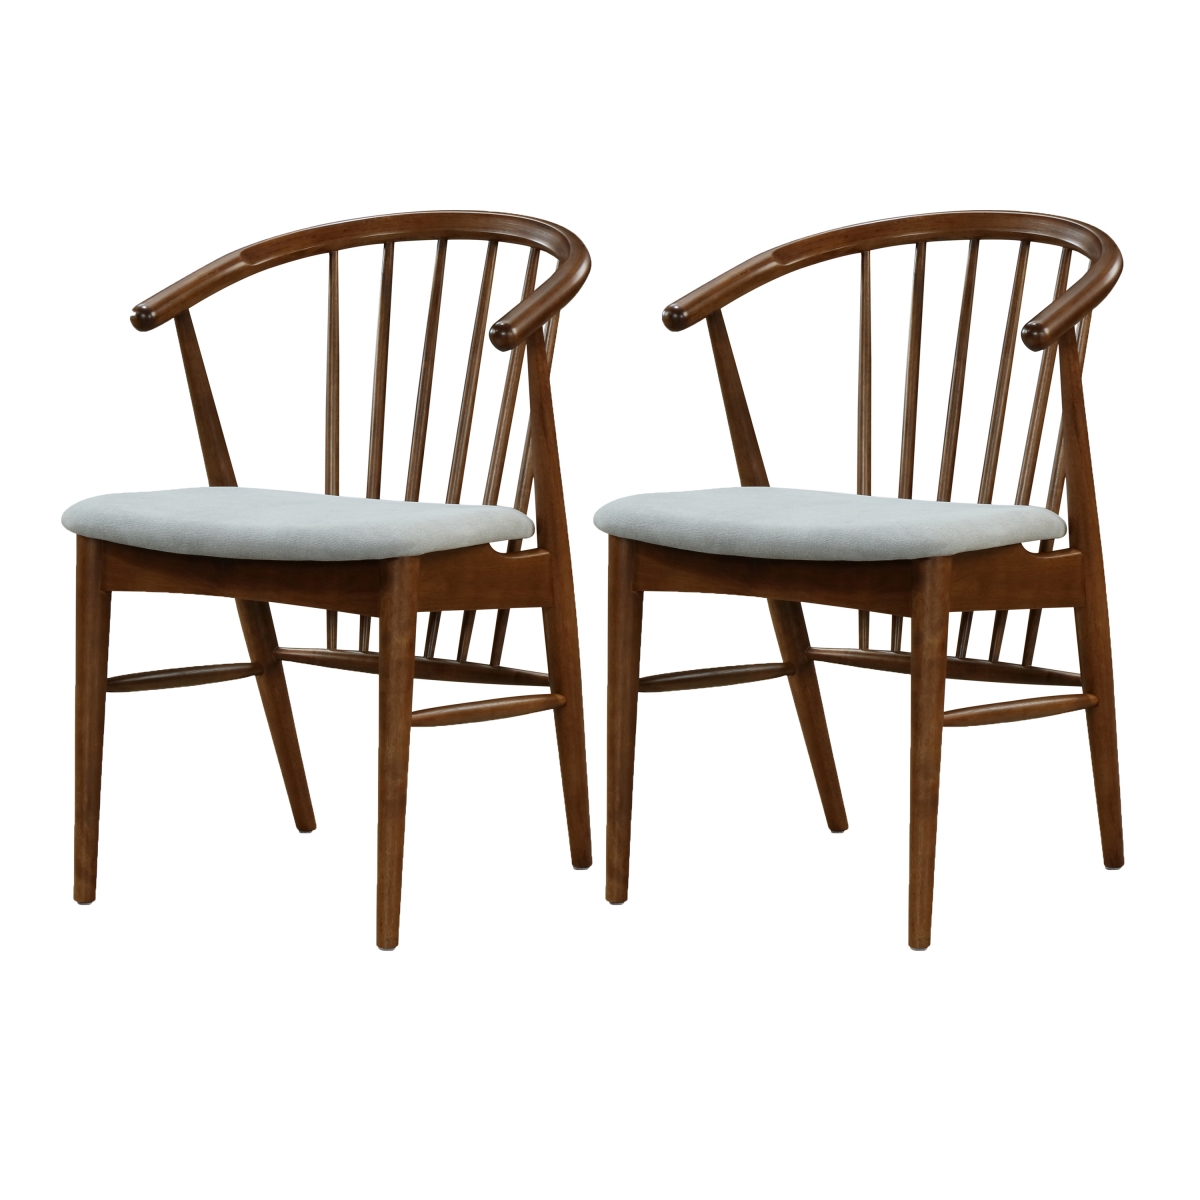 1320002-501 23 X 20.50 X 31 In. Harry Dining Chair, Studio Gray